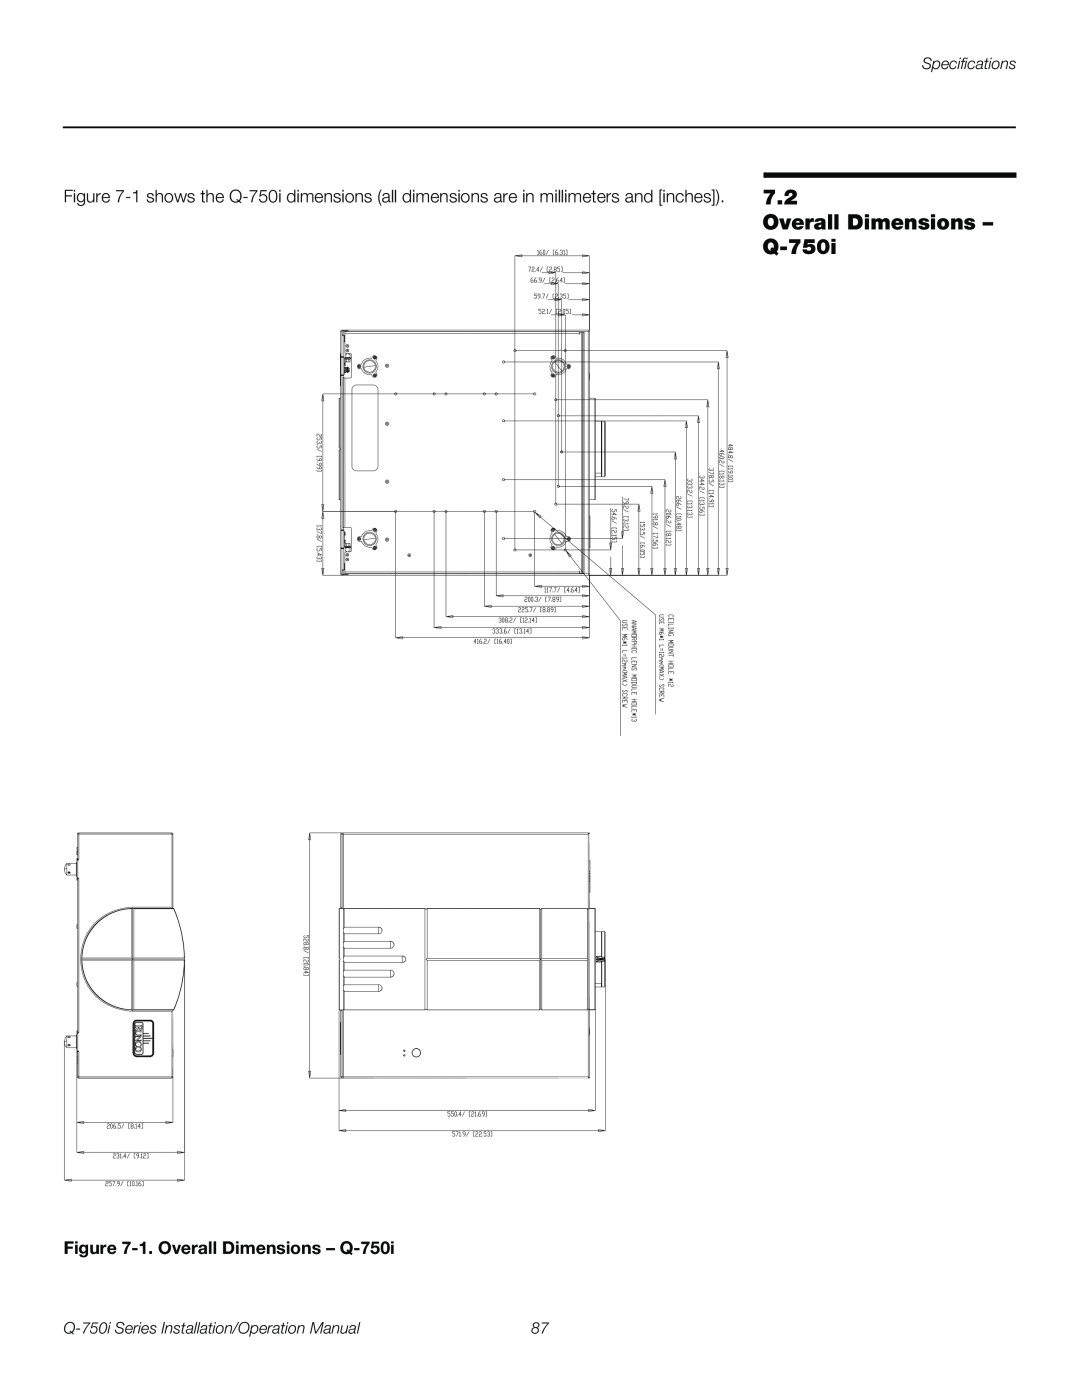 Runco Q-750I operation manual 1.Overall Dimensions - Q-750i, Specifications 